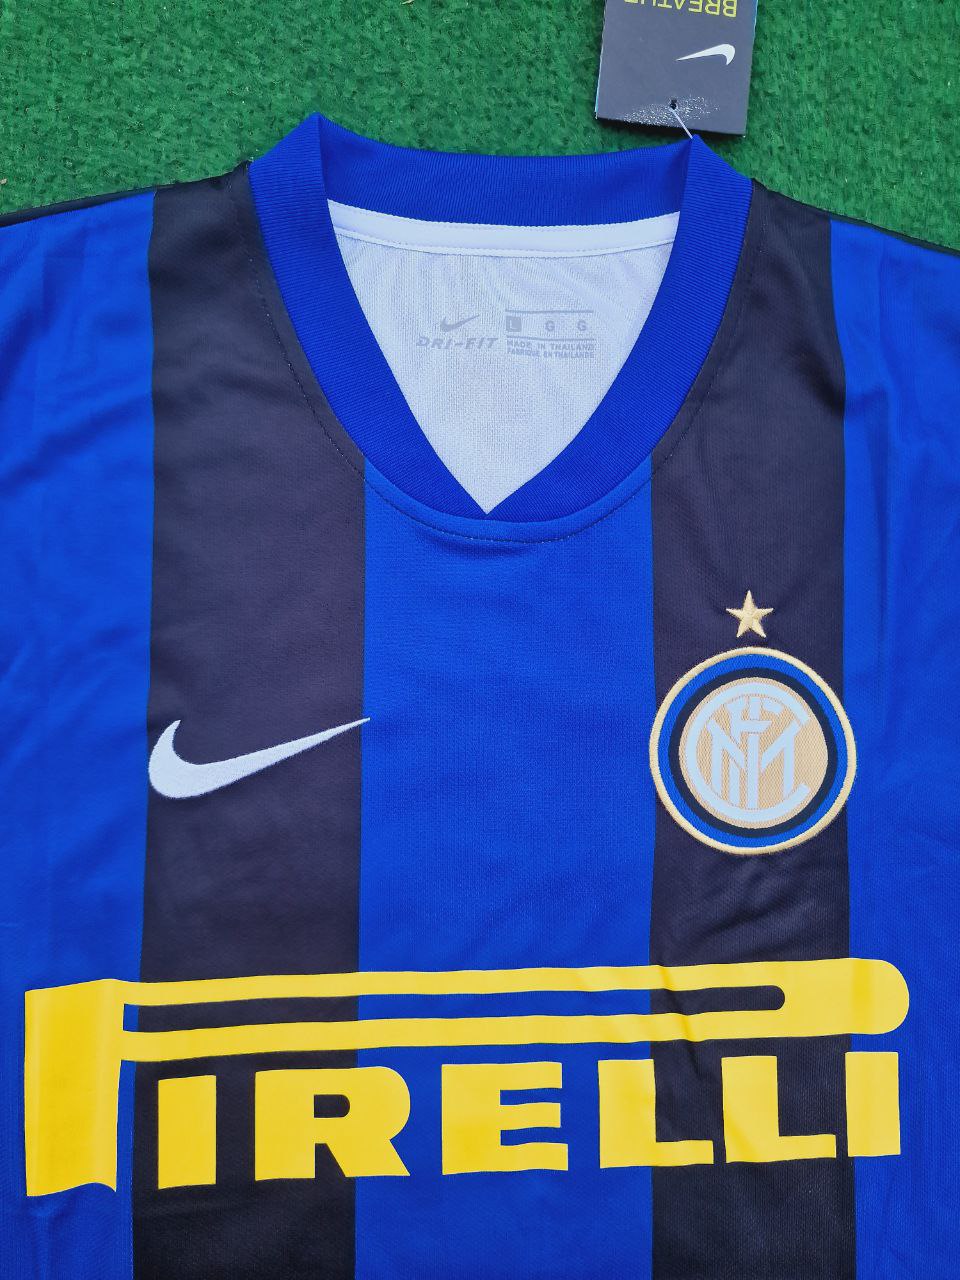 Adriano Inter Fc Retro Football Jersey